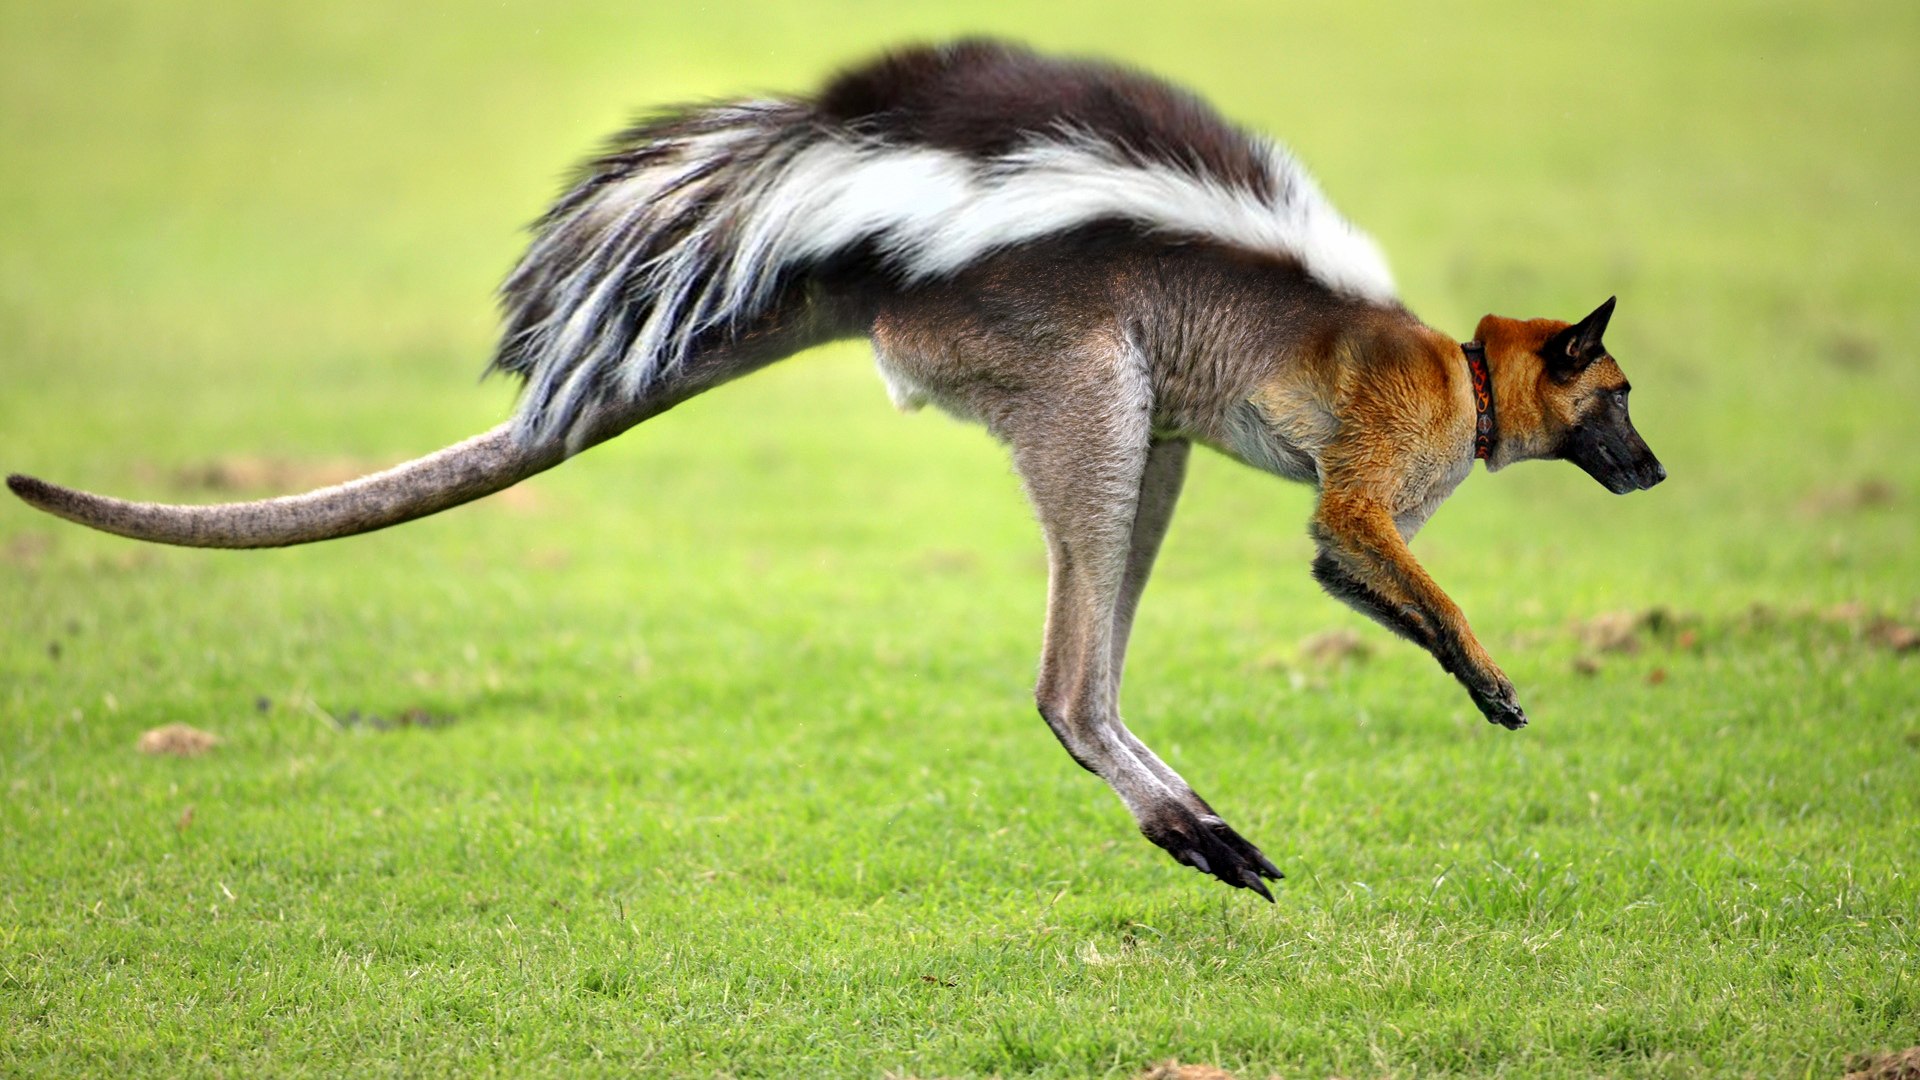 Узкий гибрид. Скорость кенгуру. Летающий кенгуру. Гибрид кенгуру. Кенгуру с крыльями.